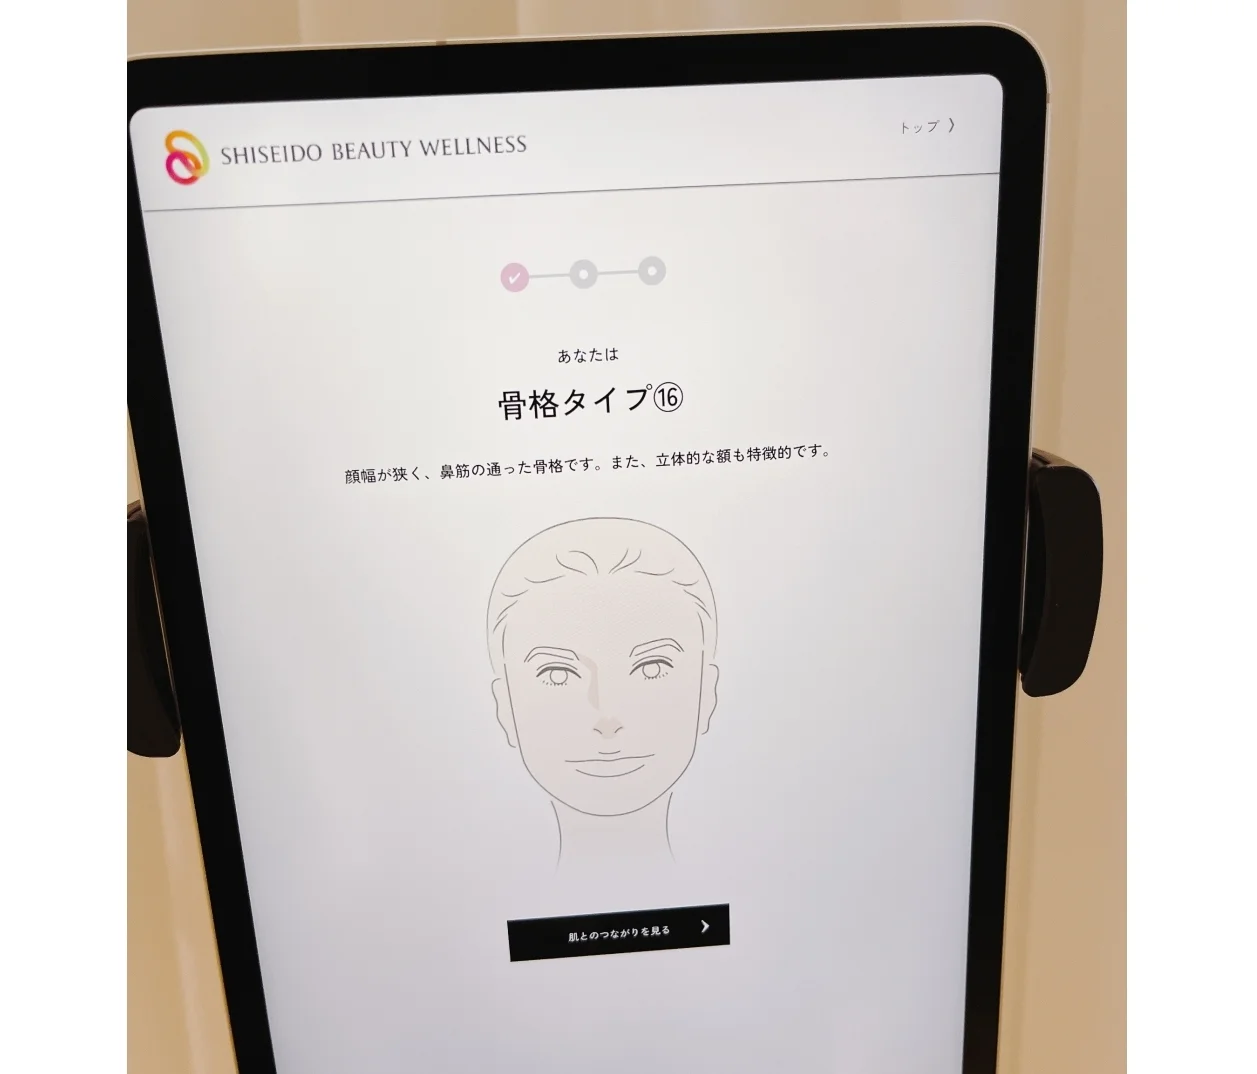 SHISEIDO BEAUTY WELLNESSの公式サイトで受けられる　肌の弱点が分かる「鼻骨格チェック」の画面の写真